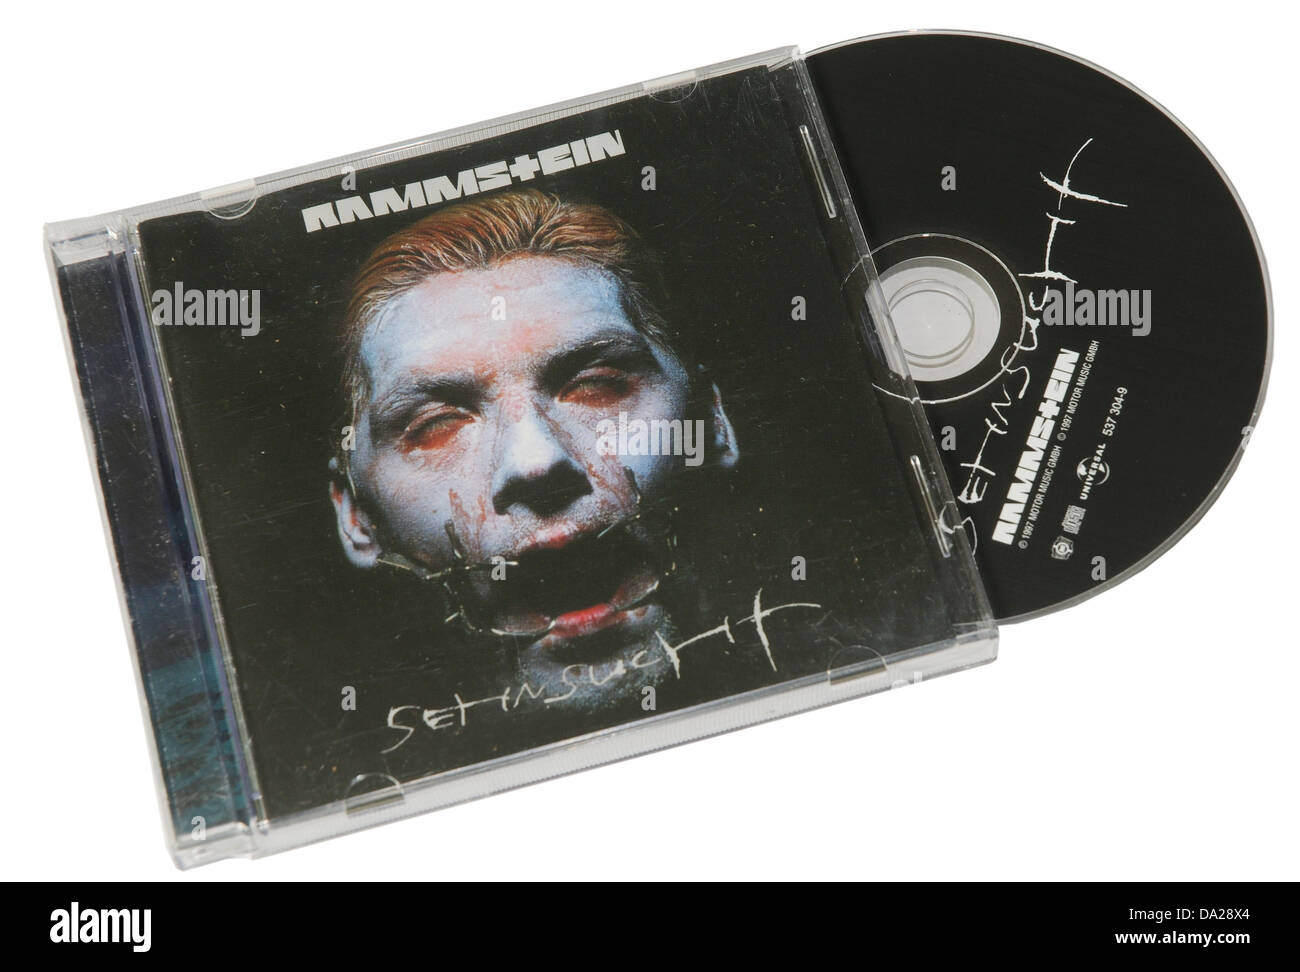 Rammstein Sehnsucht album on CD Stock Photo